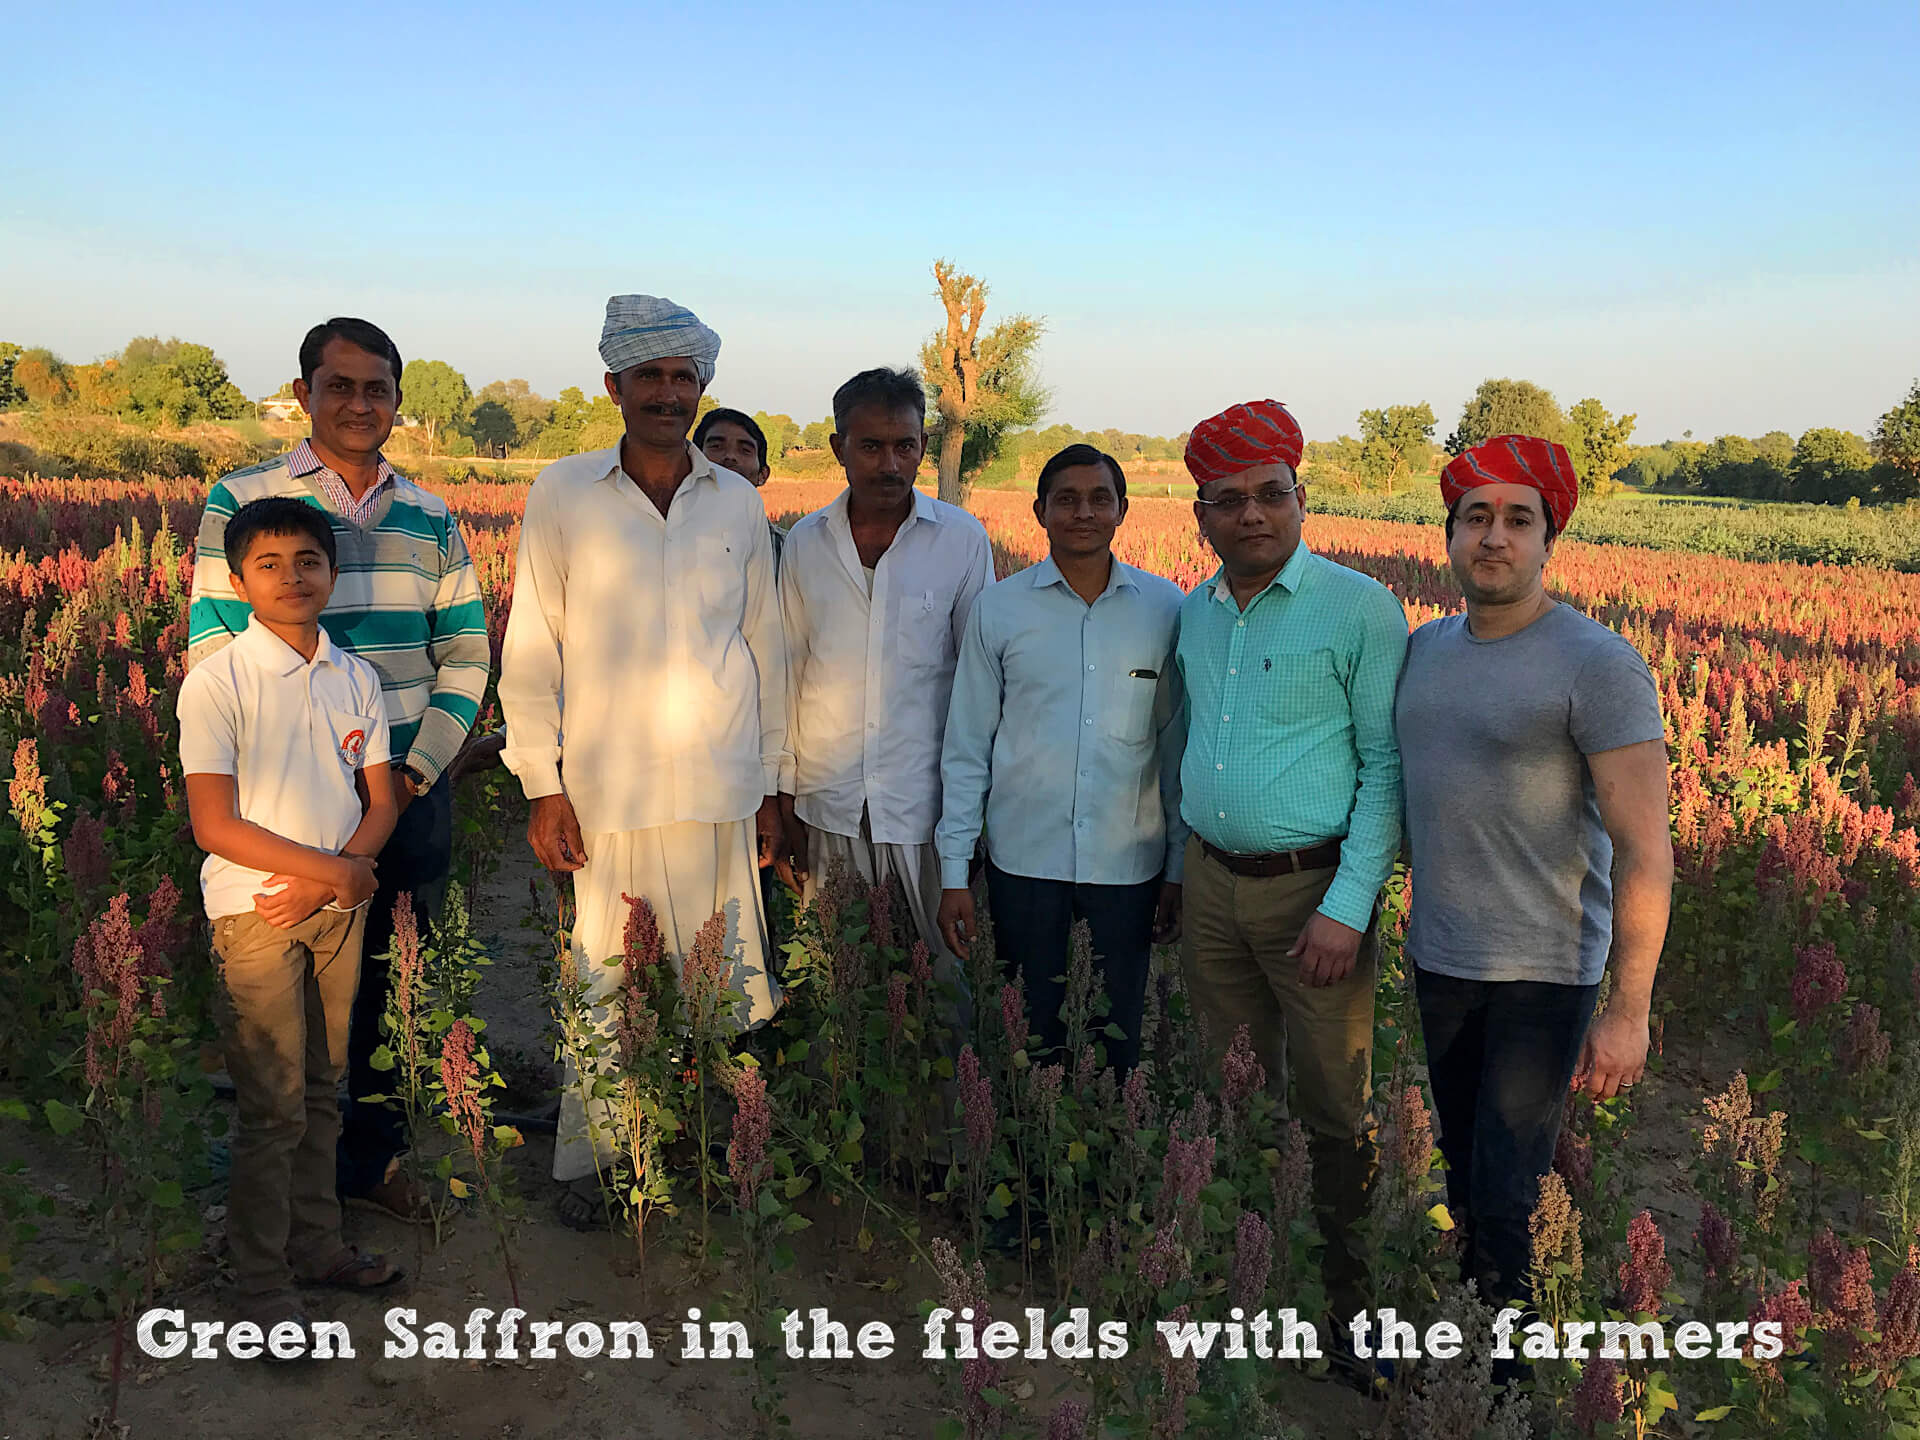 Green Saffron team meeting the farmers in India